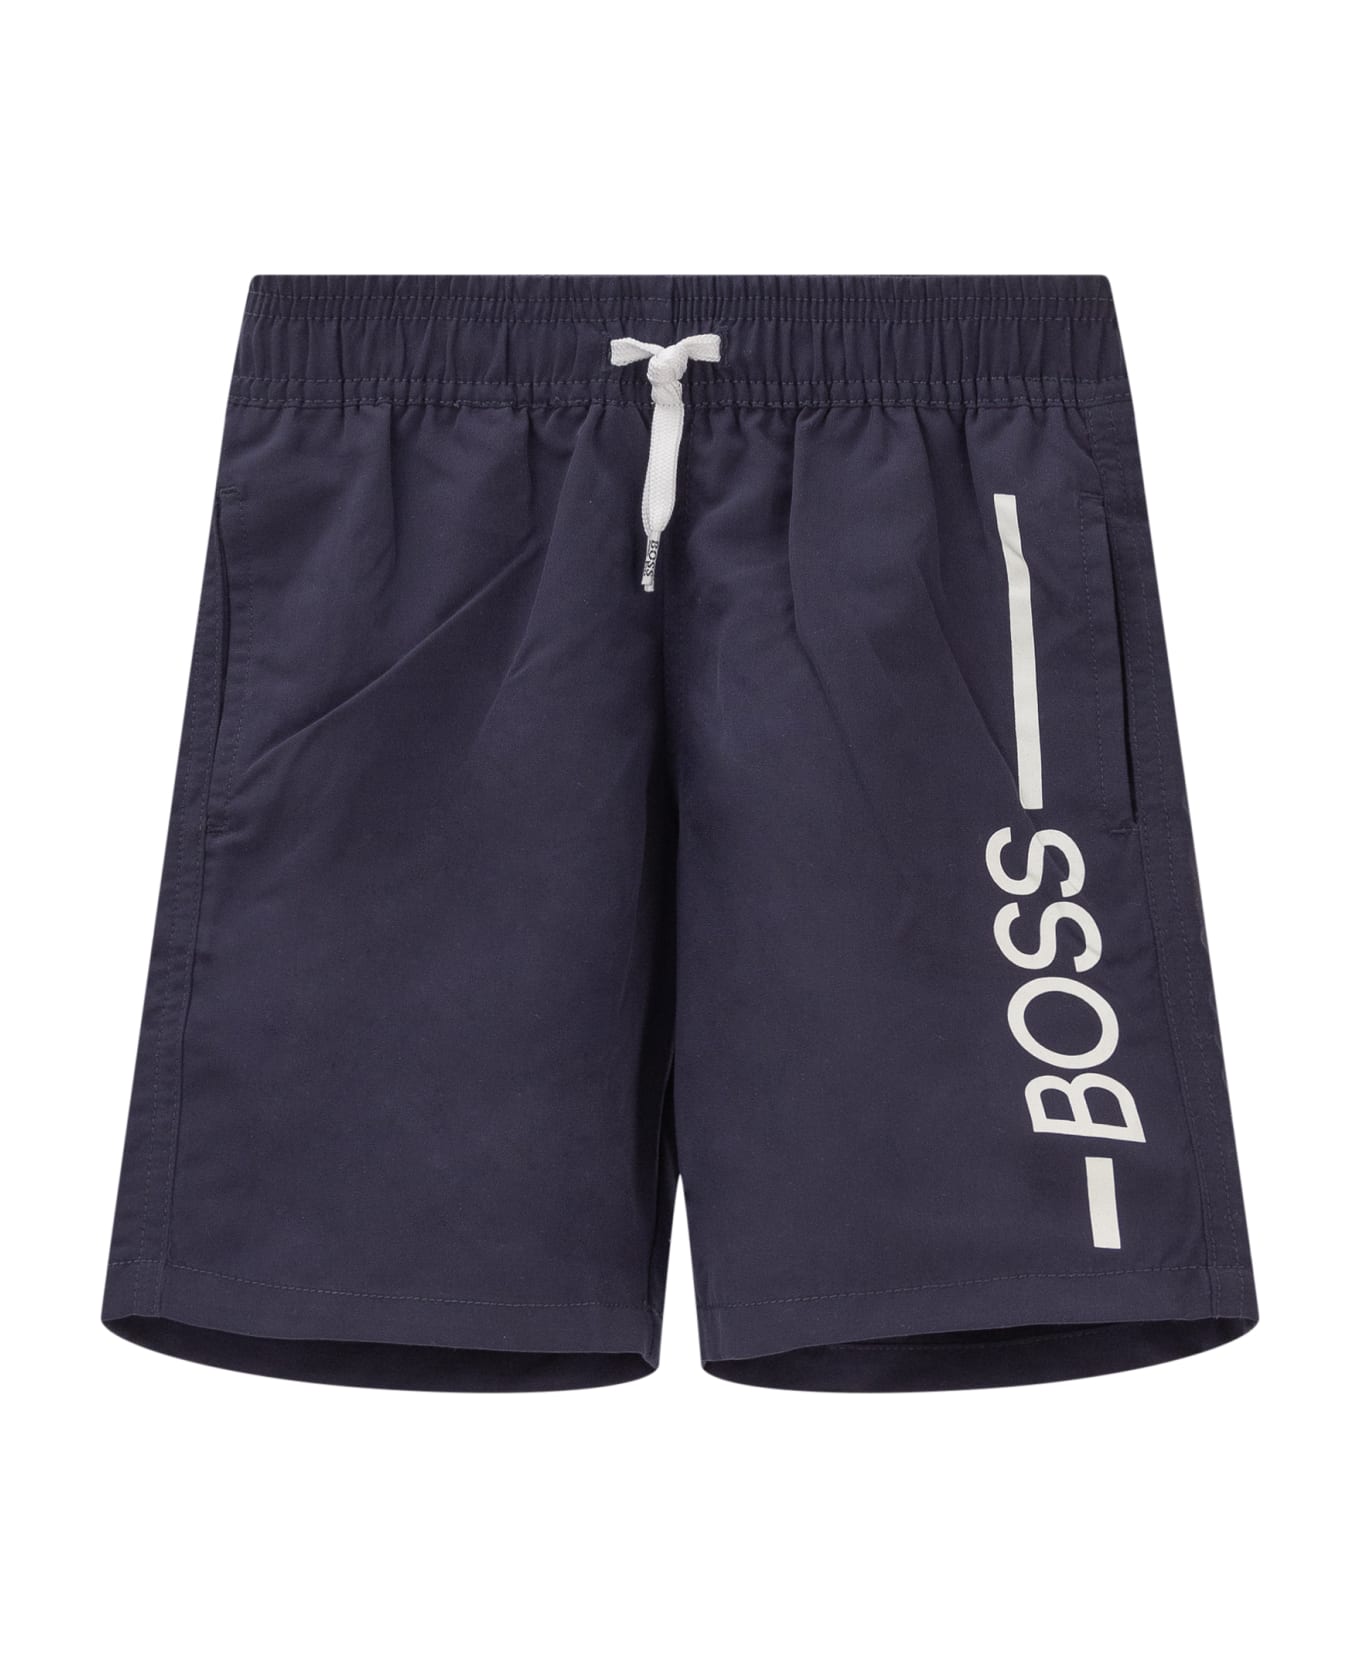 Hugo Boss Swim Shorts - MARINE 水着